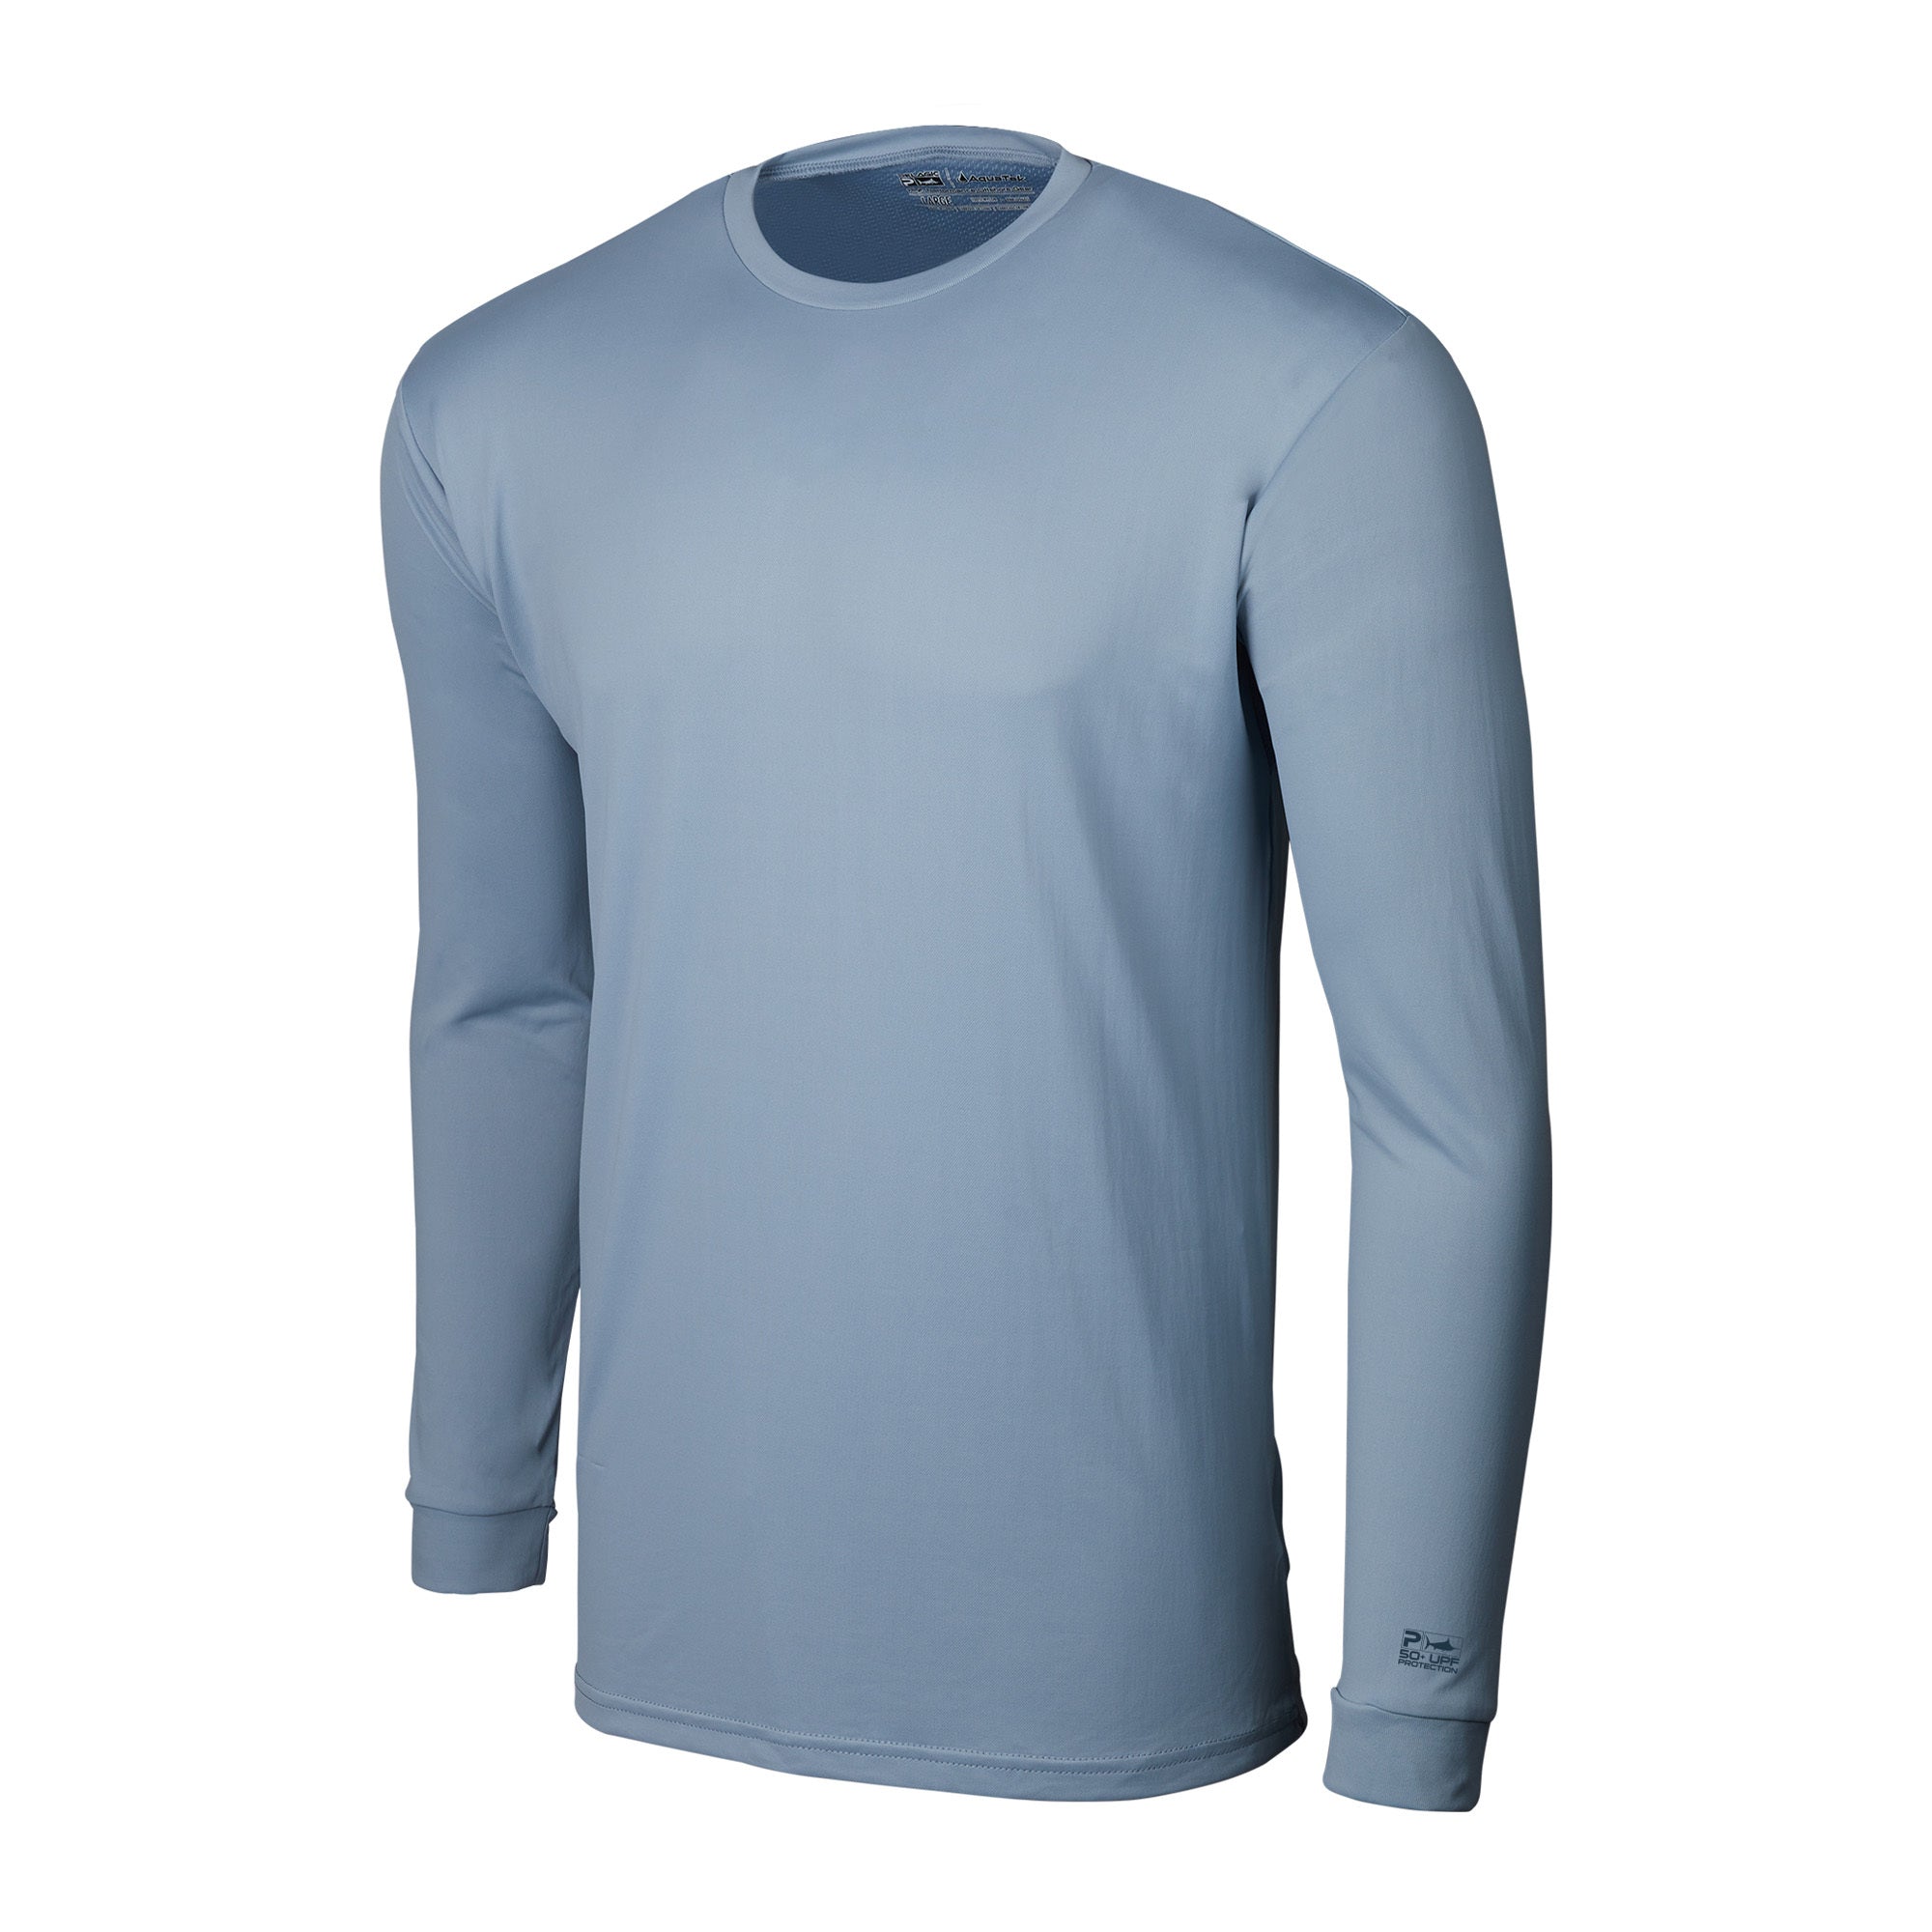 Reef Predator T-Shirt - Blue Small, Men's